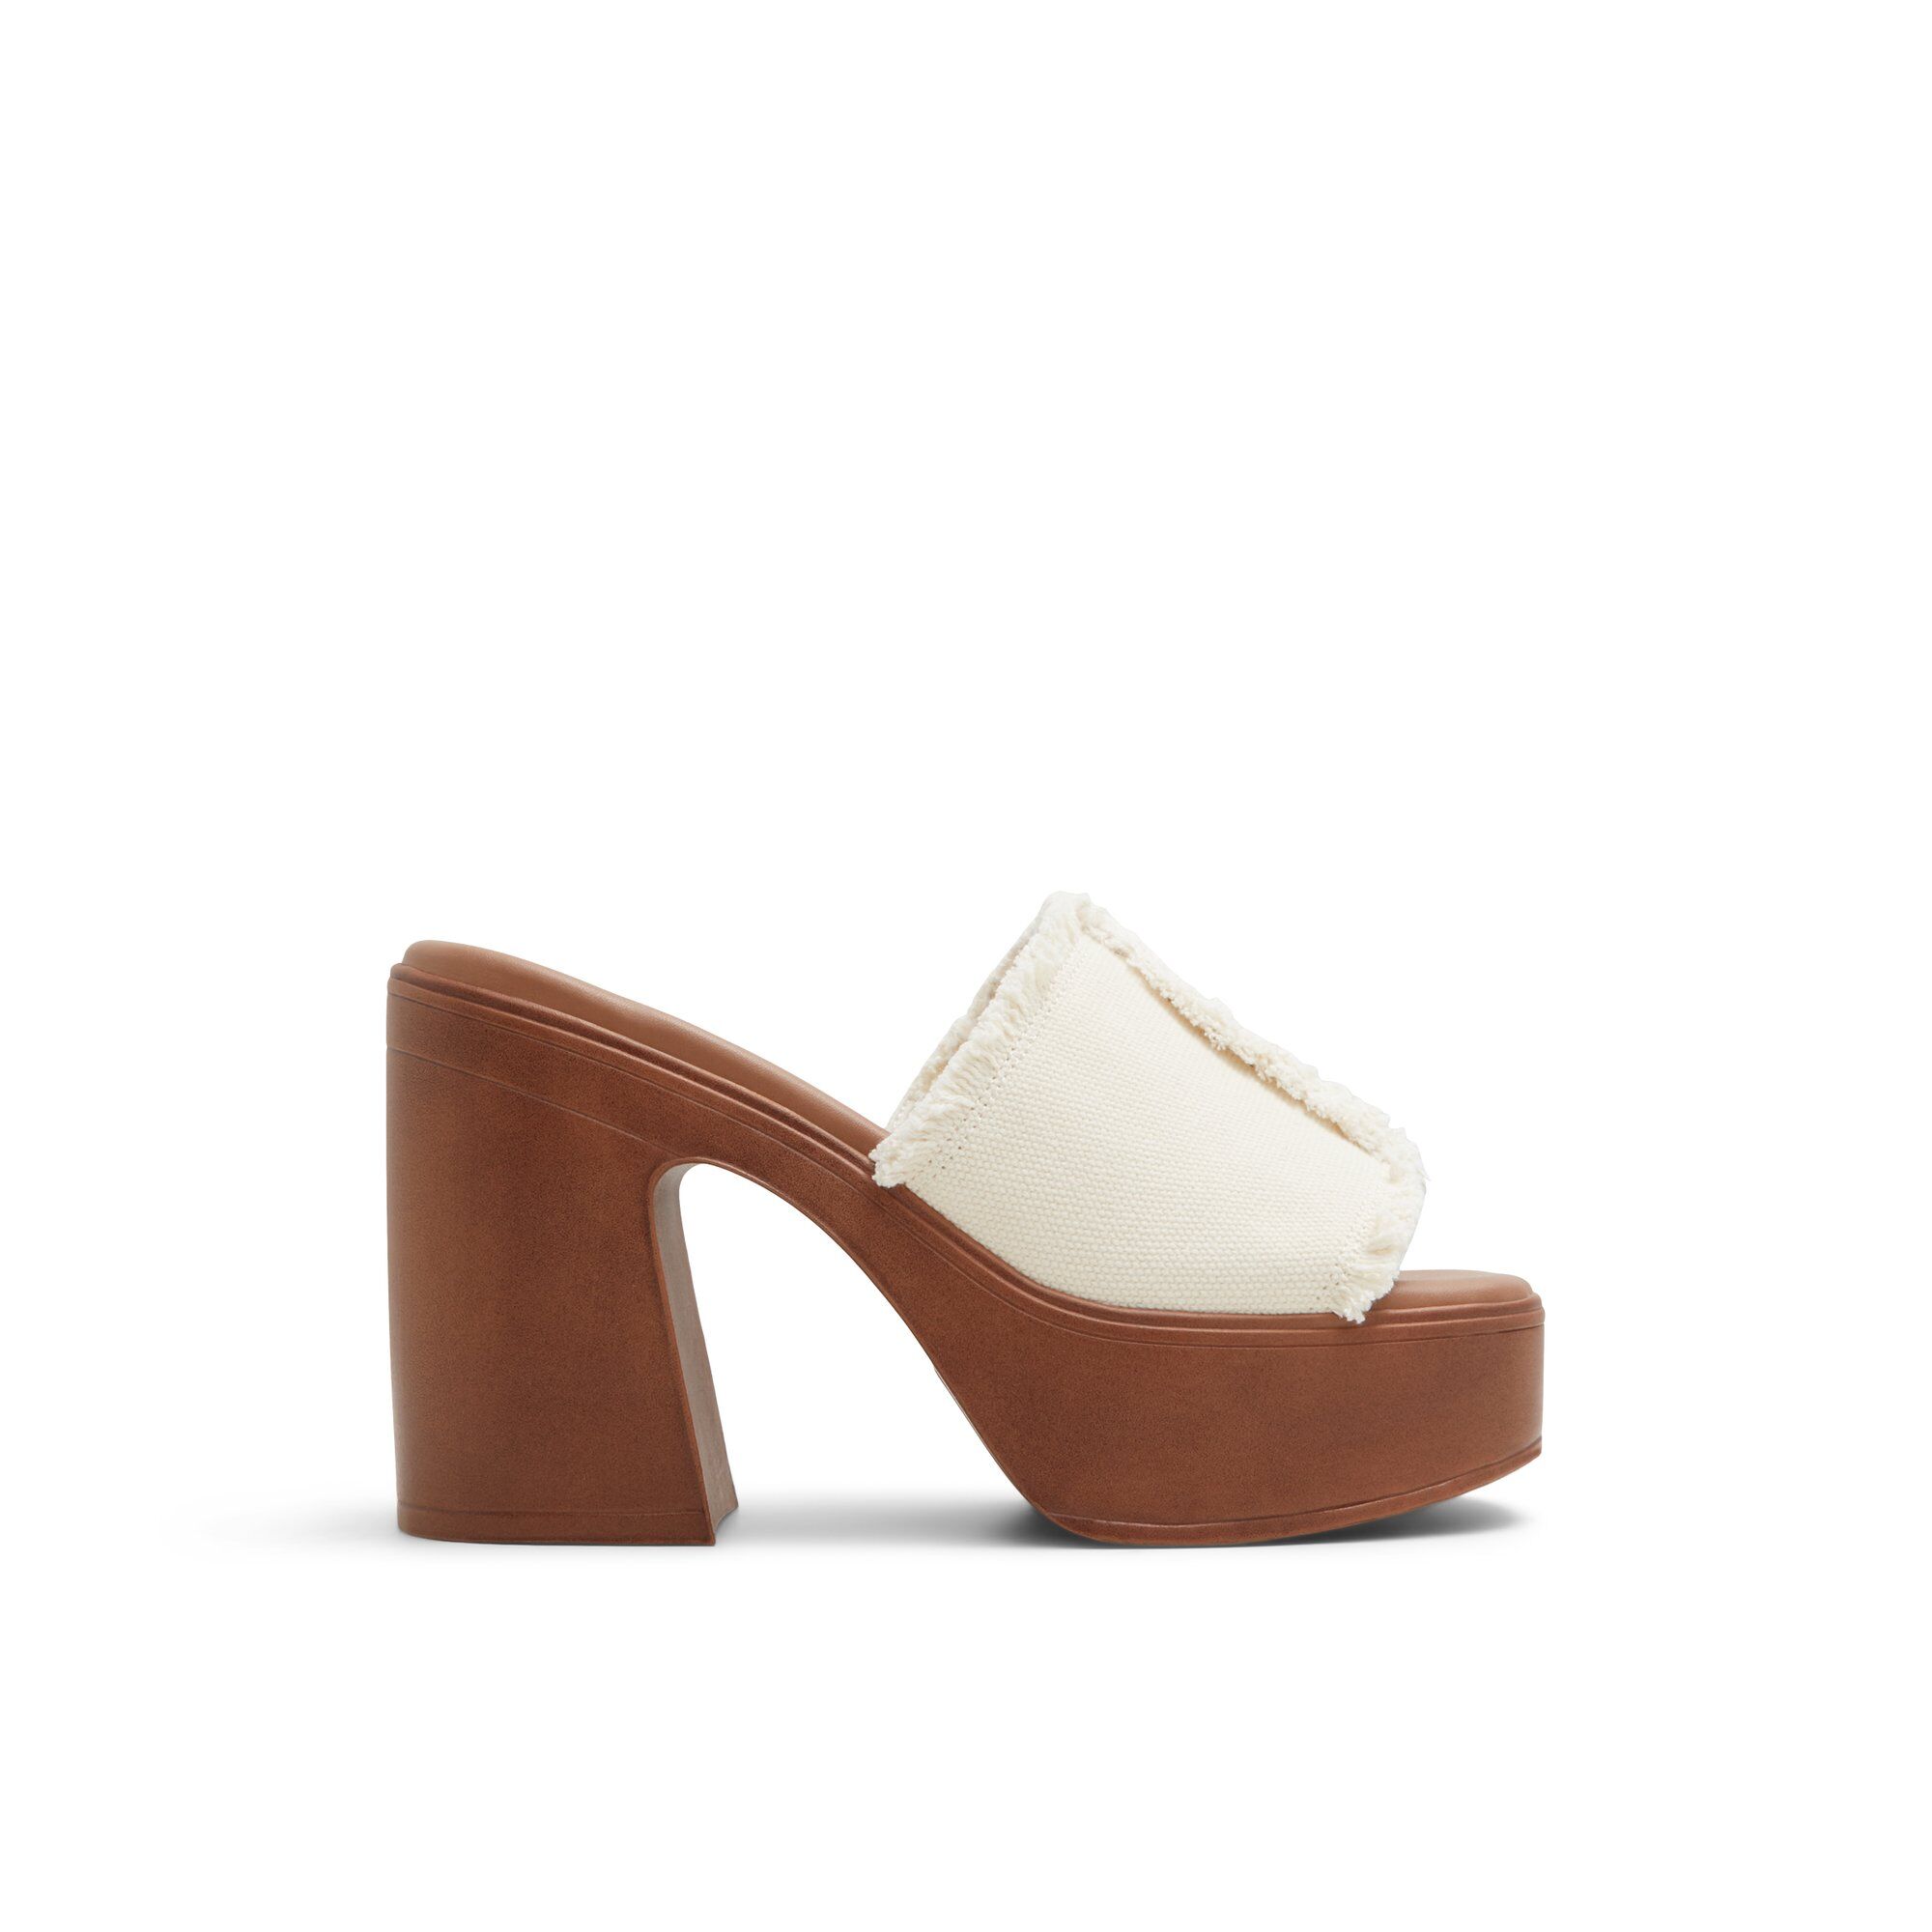 ALDO Maysee - Women's Heeled Mules Sandals - White, Size 11